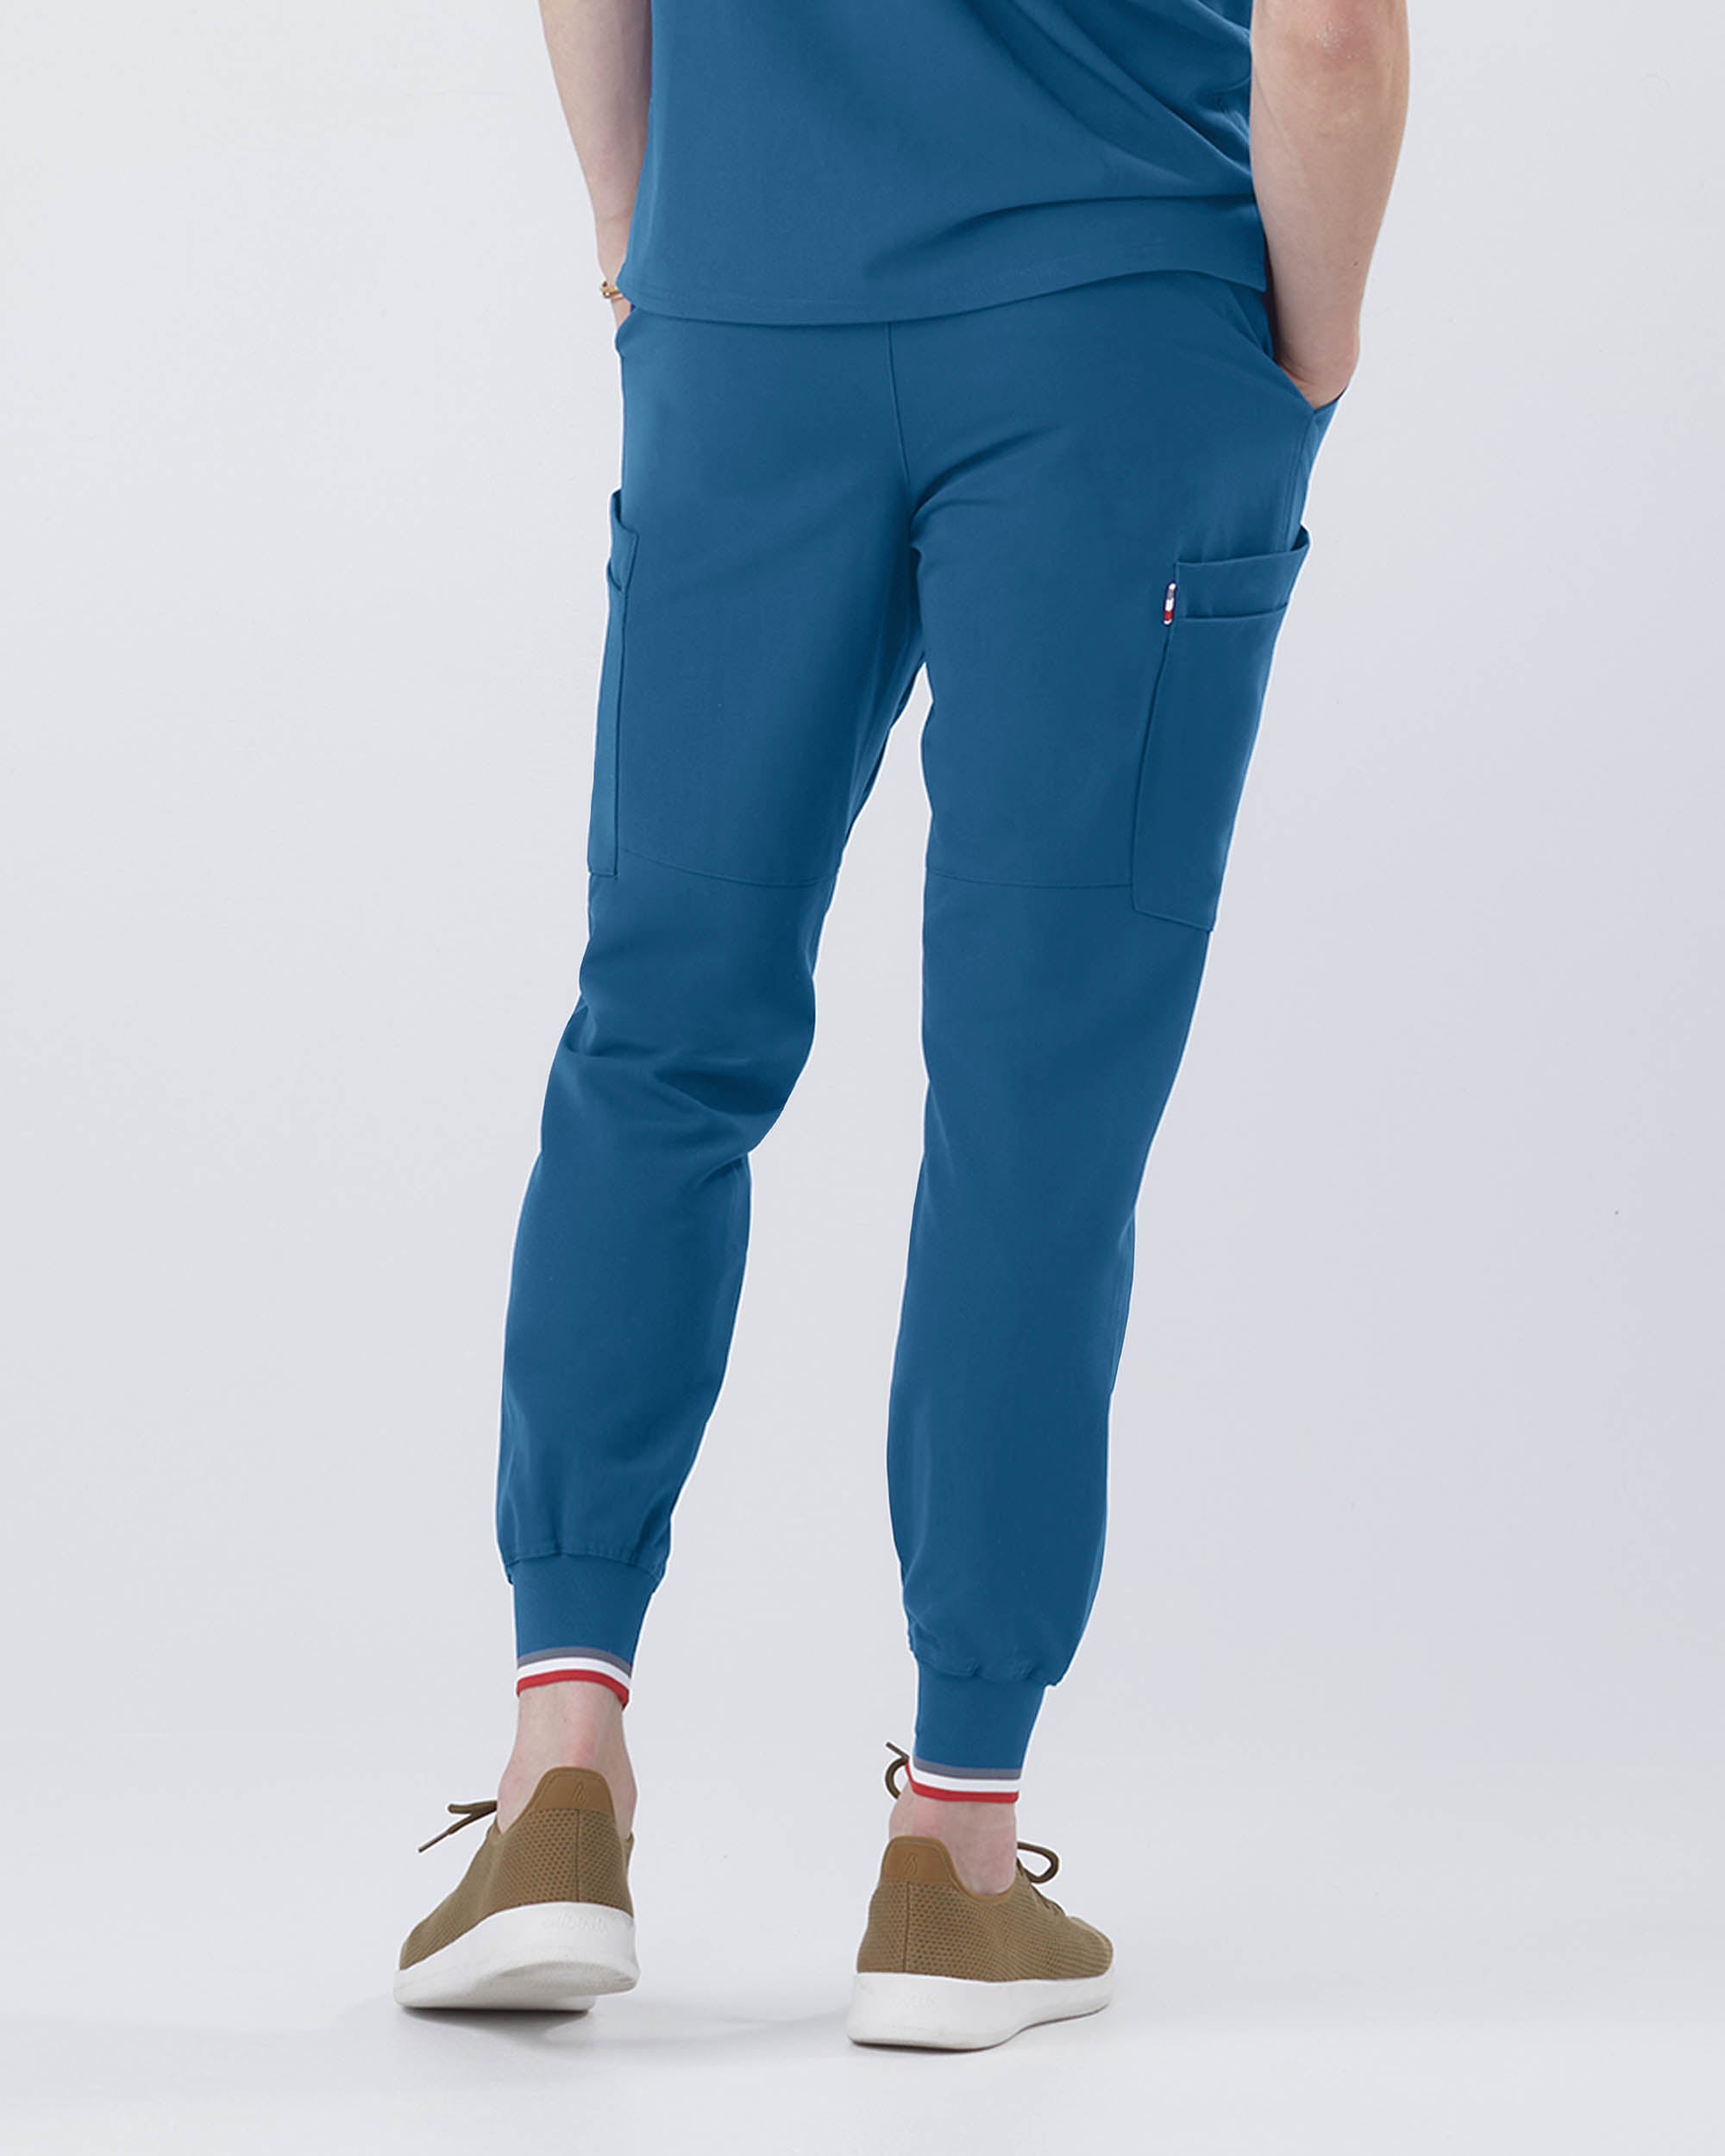 Women's Breathable Base Layer Pants - FR 900 Blue - Dark blue